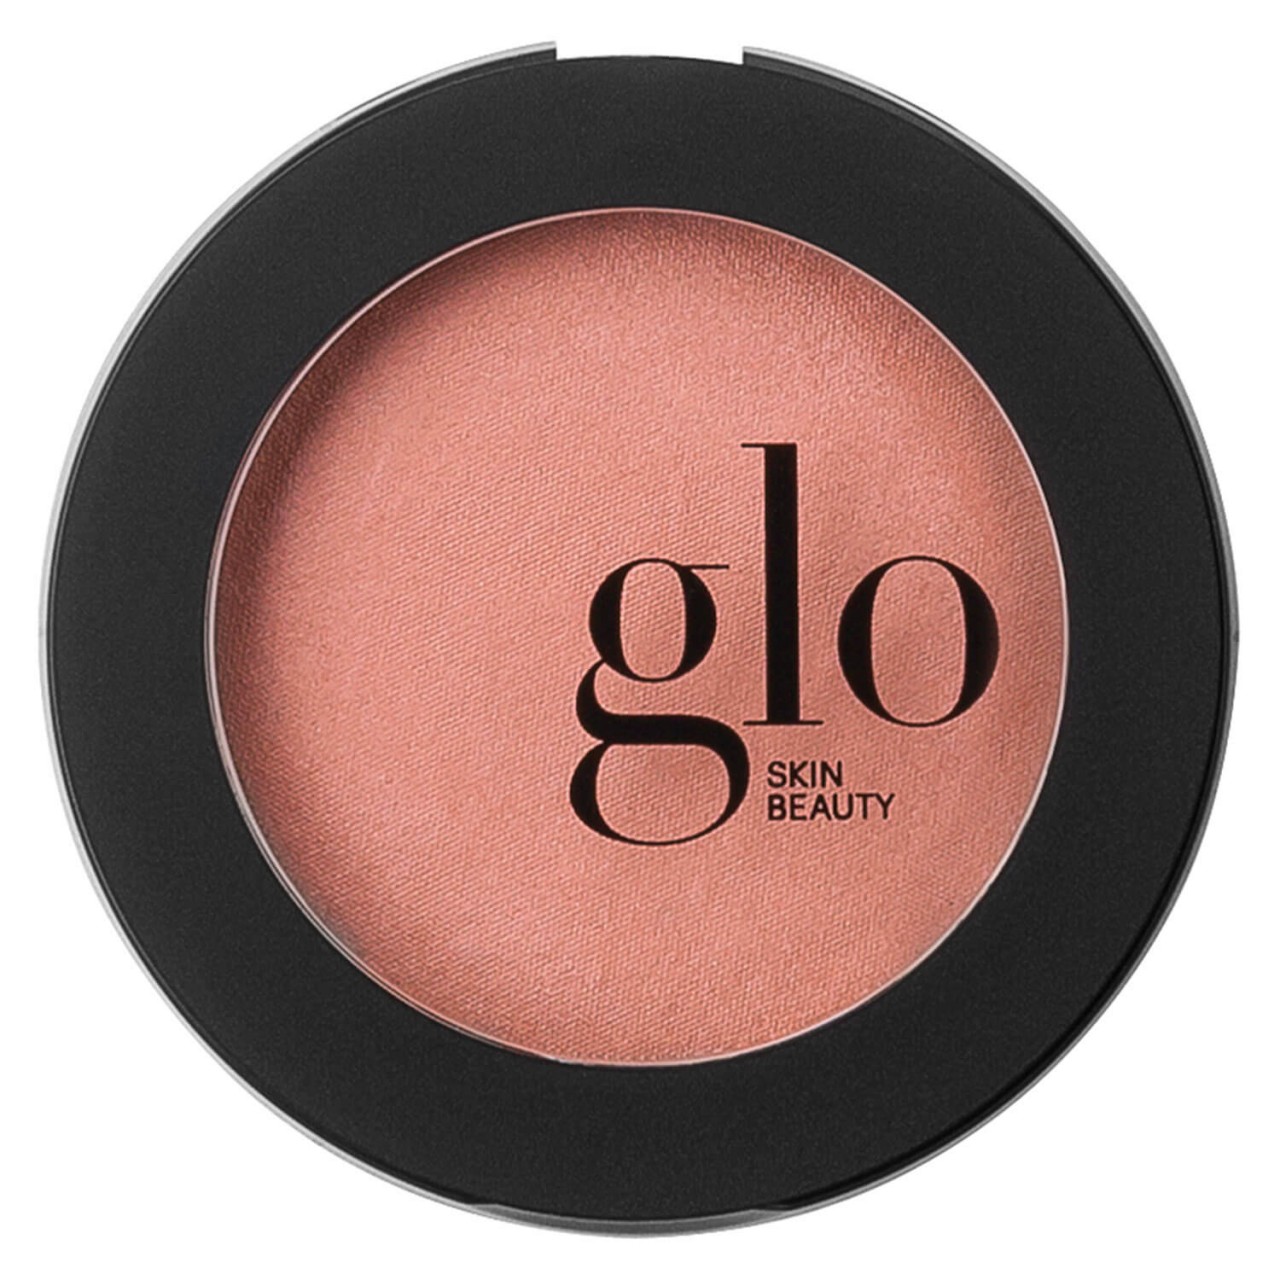 Glo Skin Beauty Blush - Blush Sweet von Glo Skin Beauty